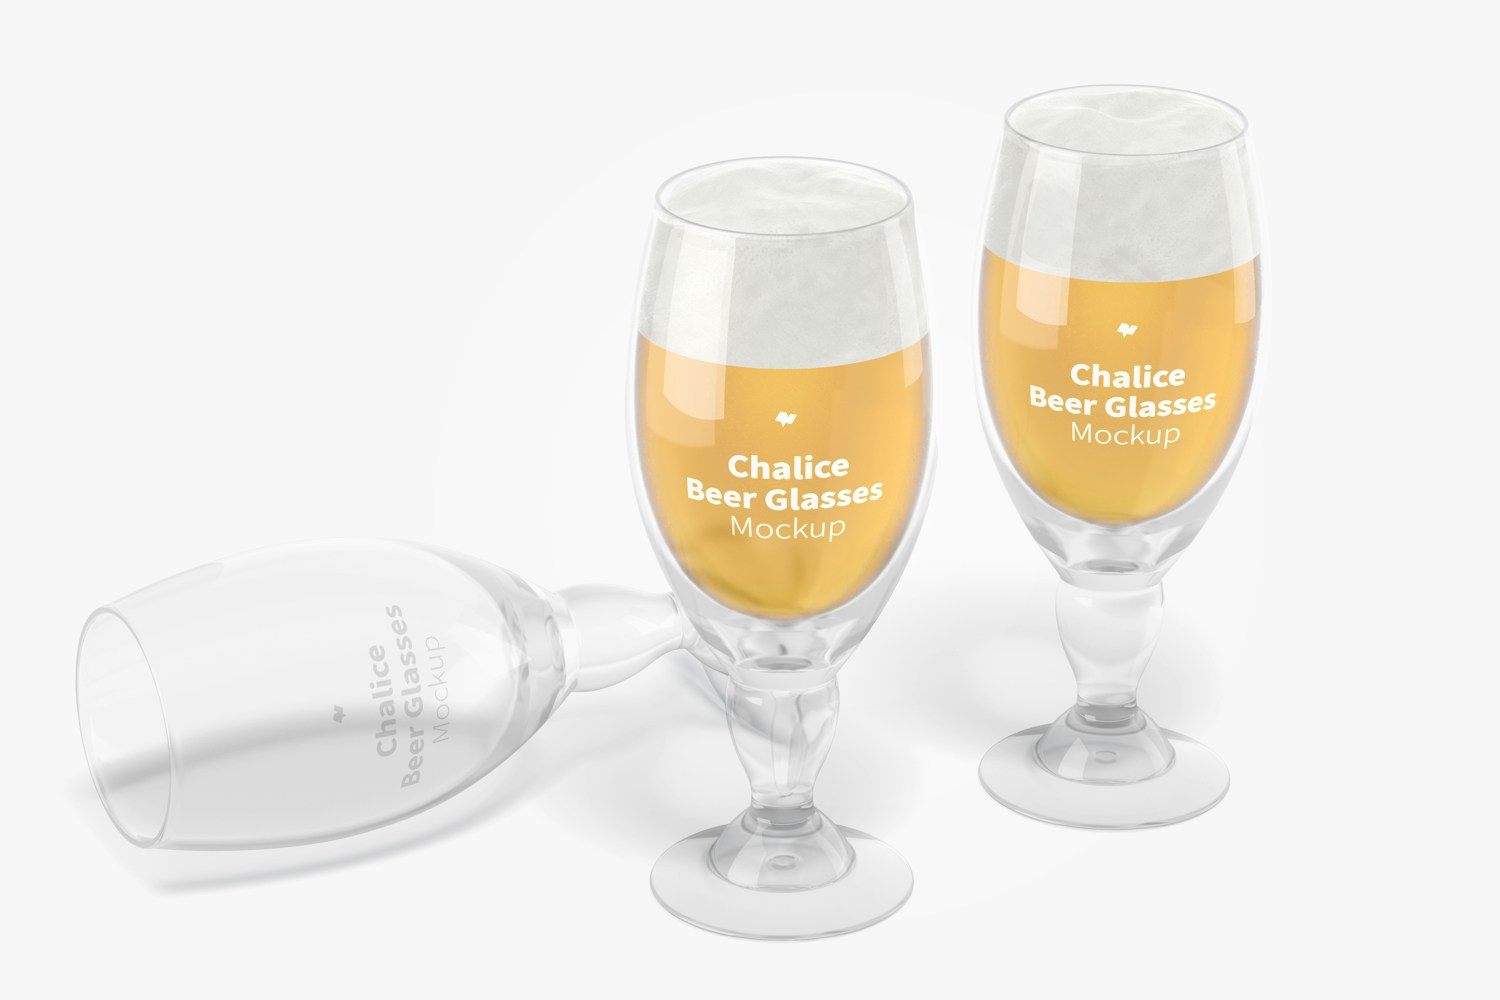 Chalice Beer Glasses Mockup